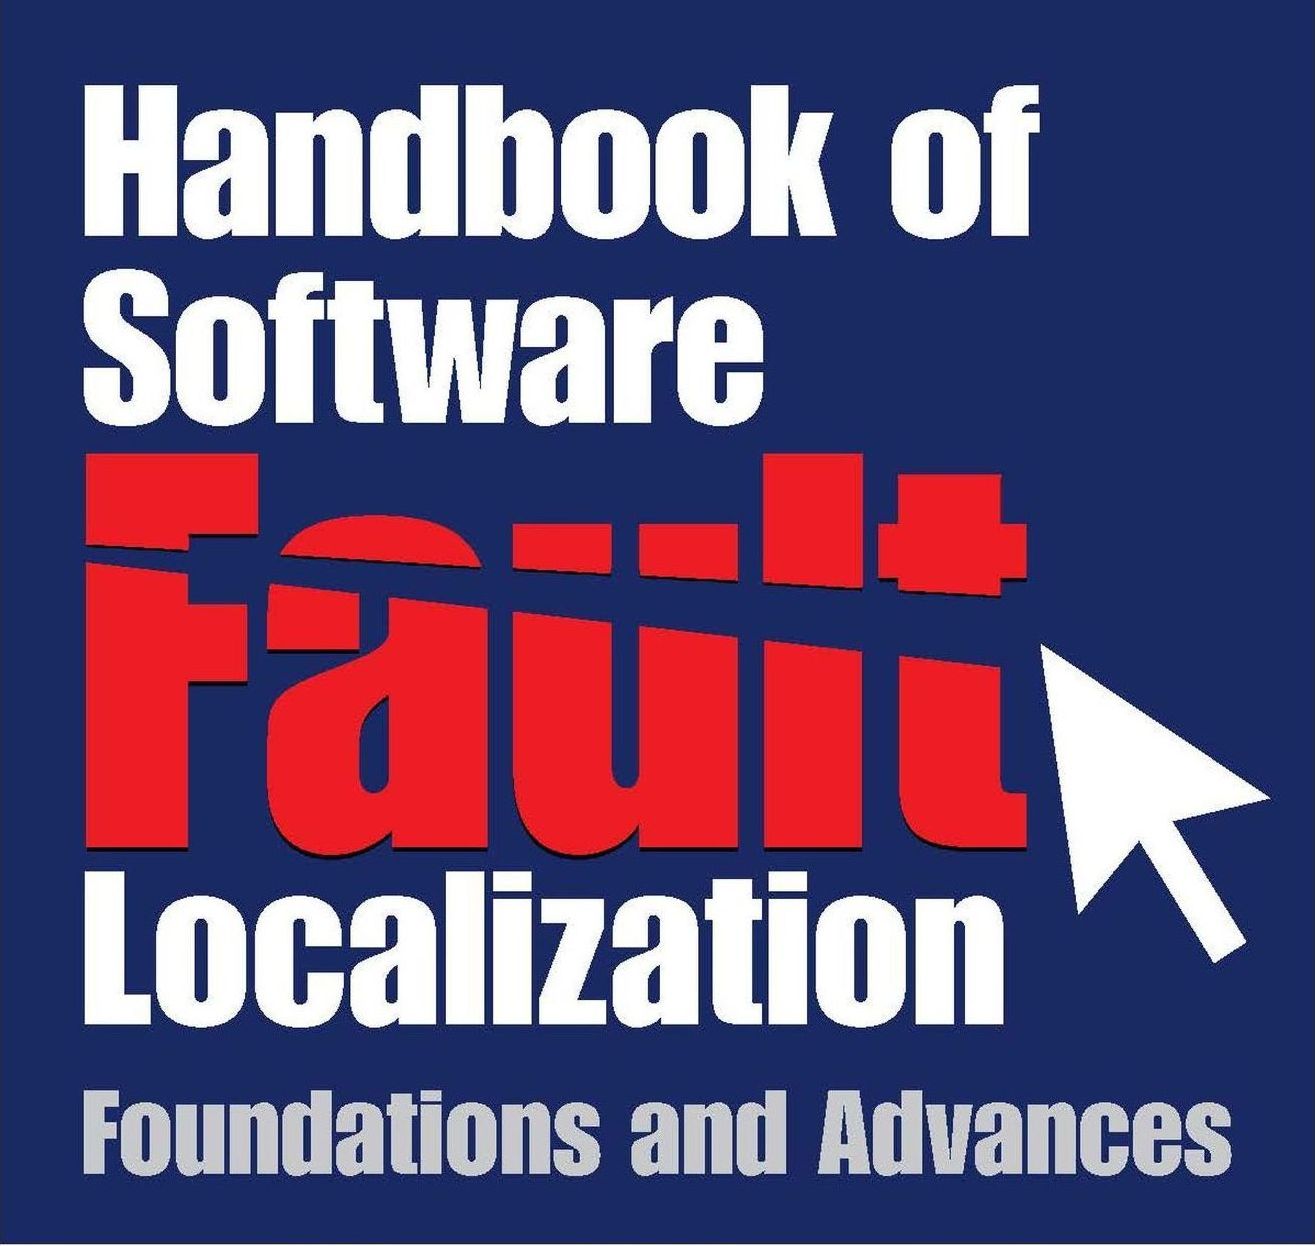 Handbook of Software Fault Localization